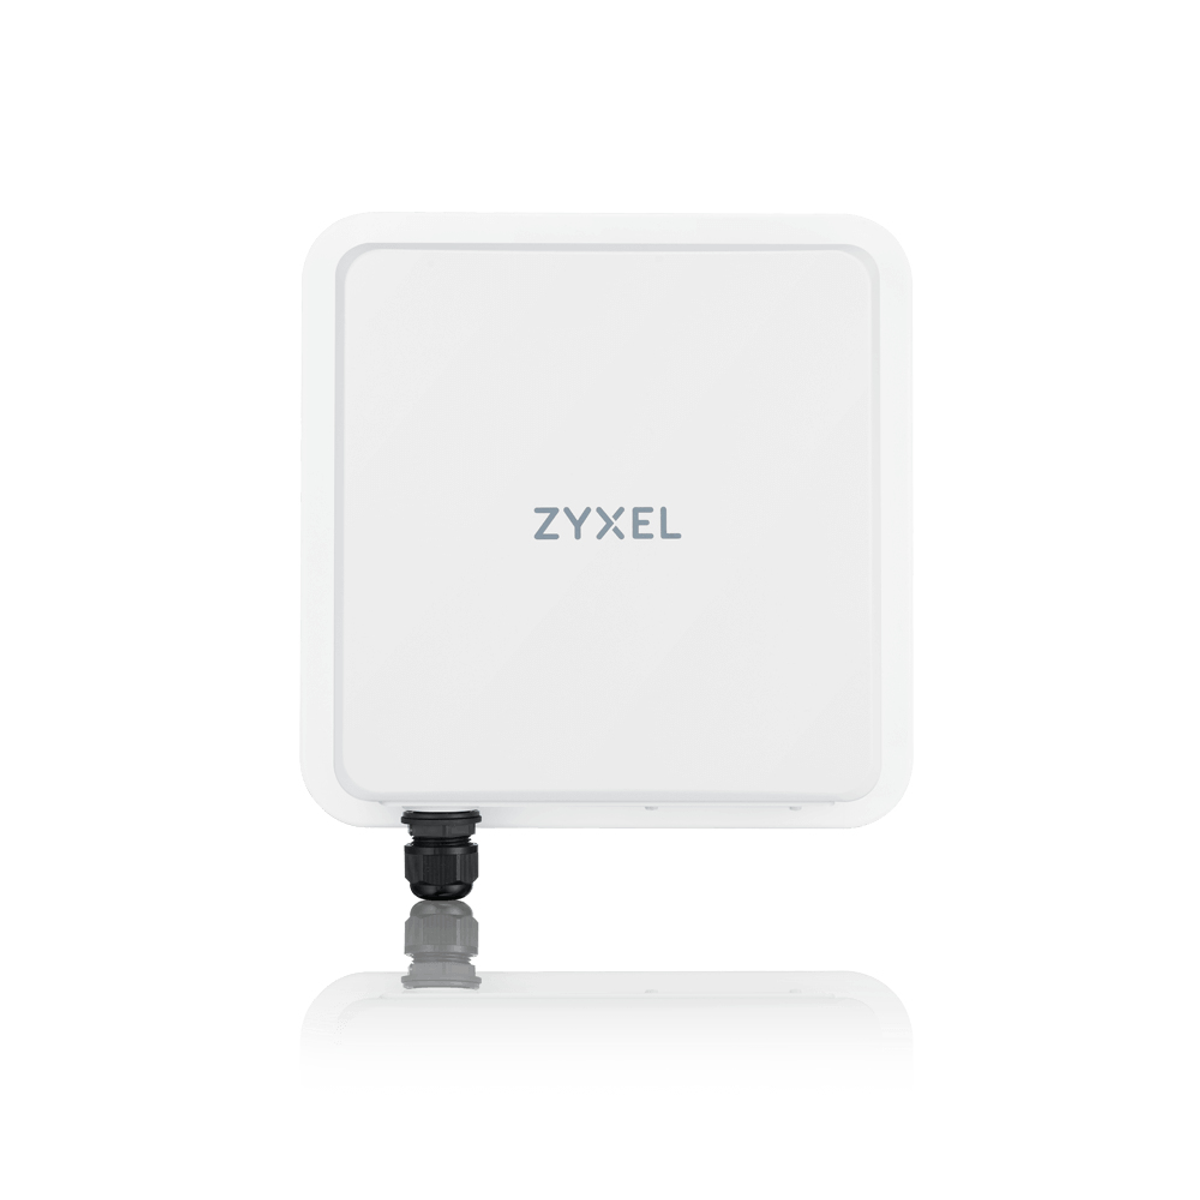 ZYXEL NR7101-EU01V1F WLAN Mbit/s Router 1